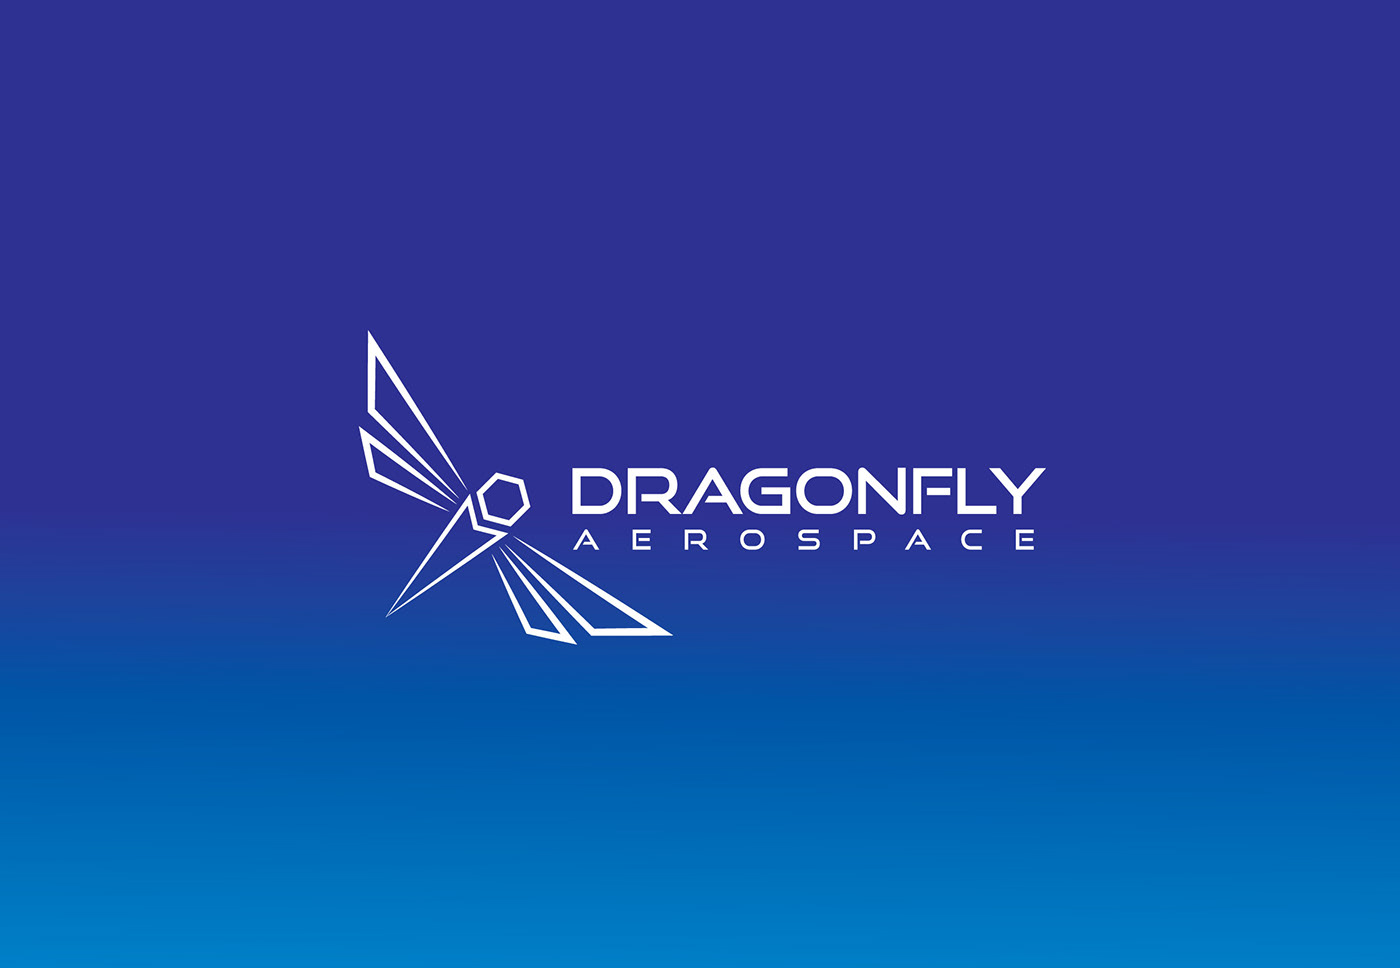 Aerospace dragonfly satellite Space 